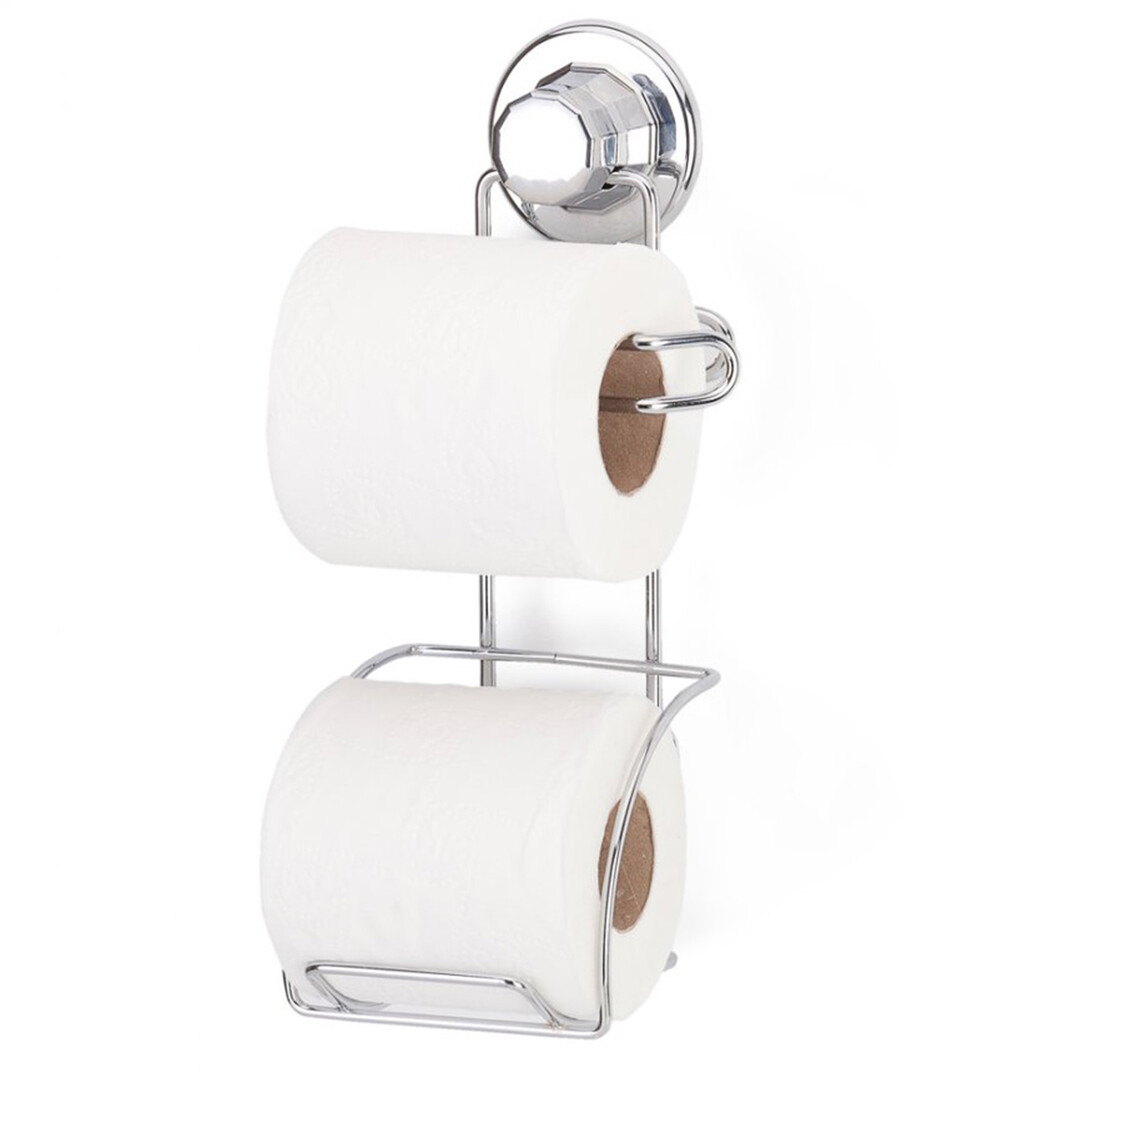    tekno-tel Vakumlu Tuvalet Kağıtlığı Yedekli  